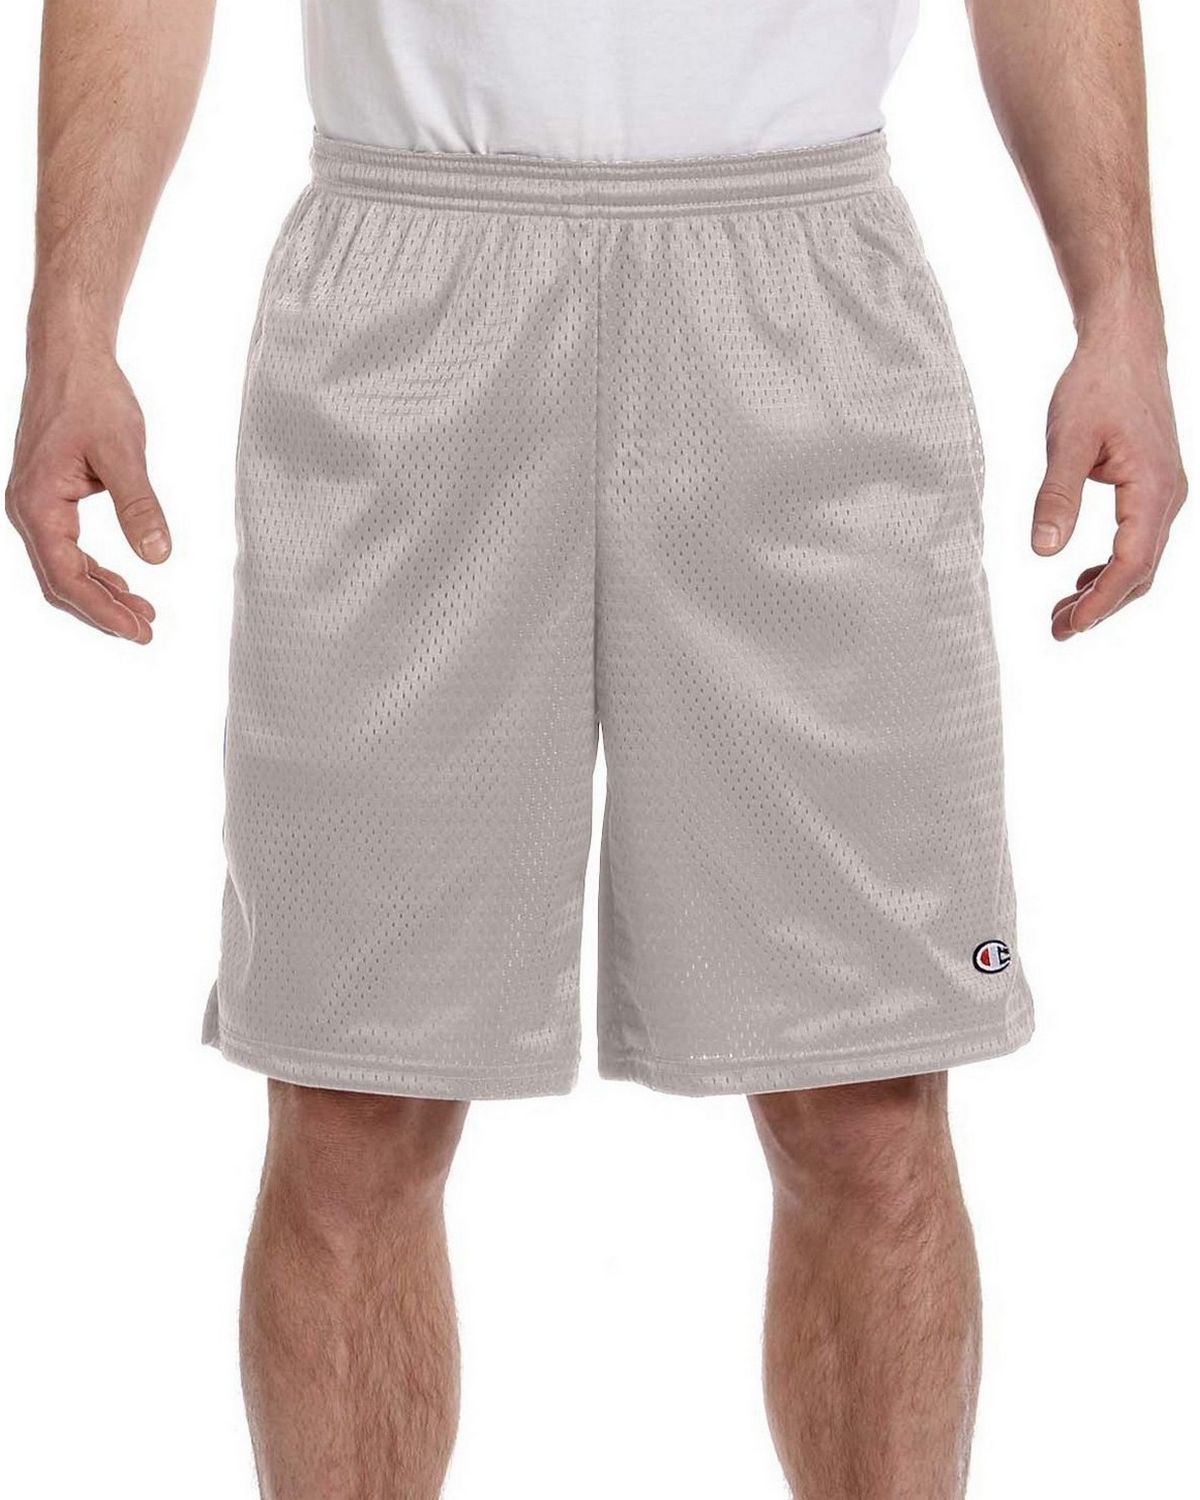 S162 Champion Mesh Shorts with Pockets 